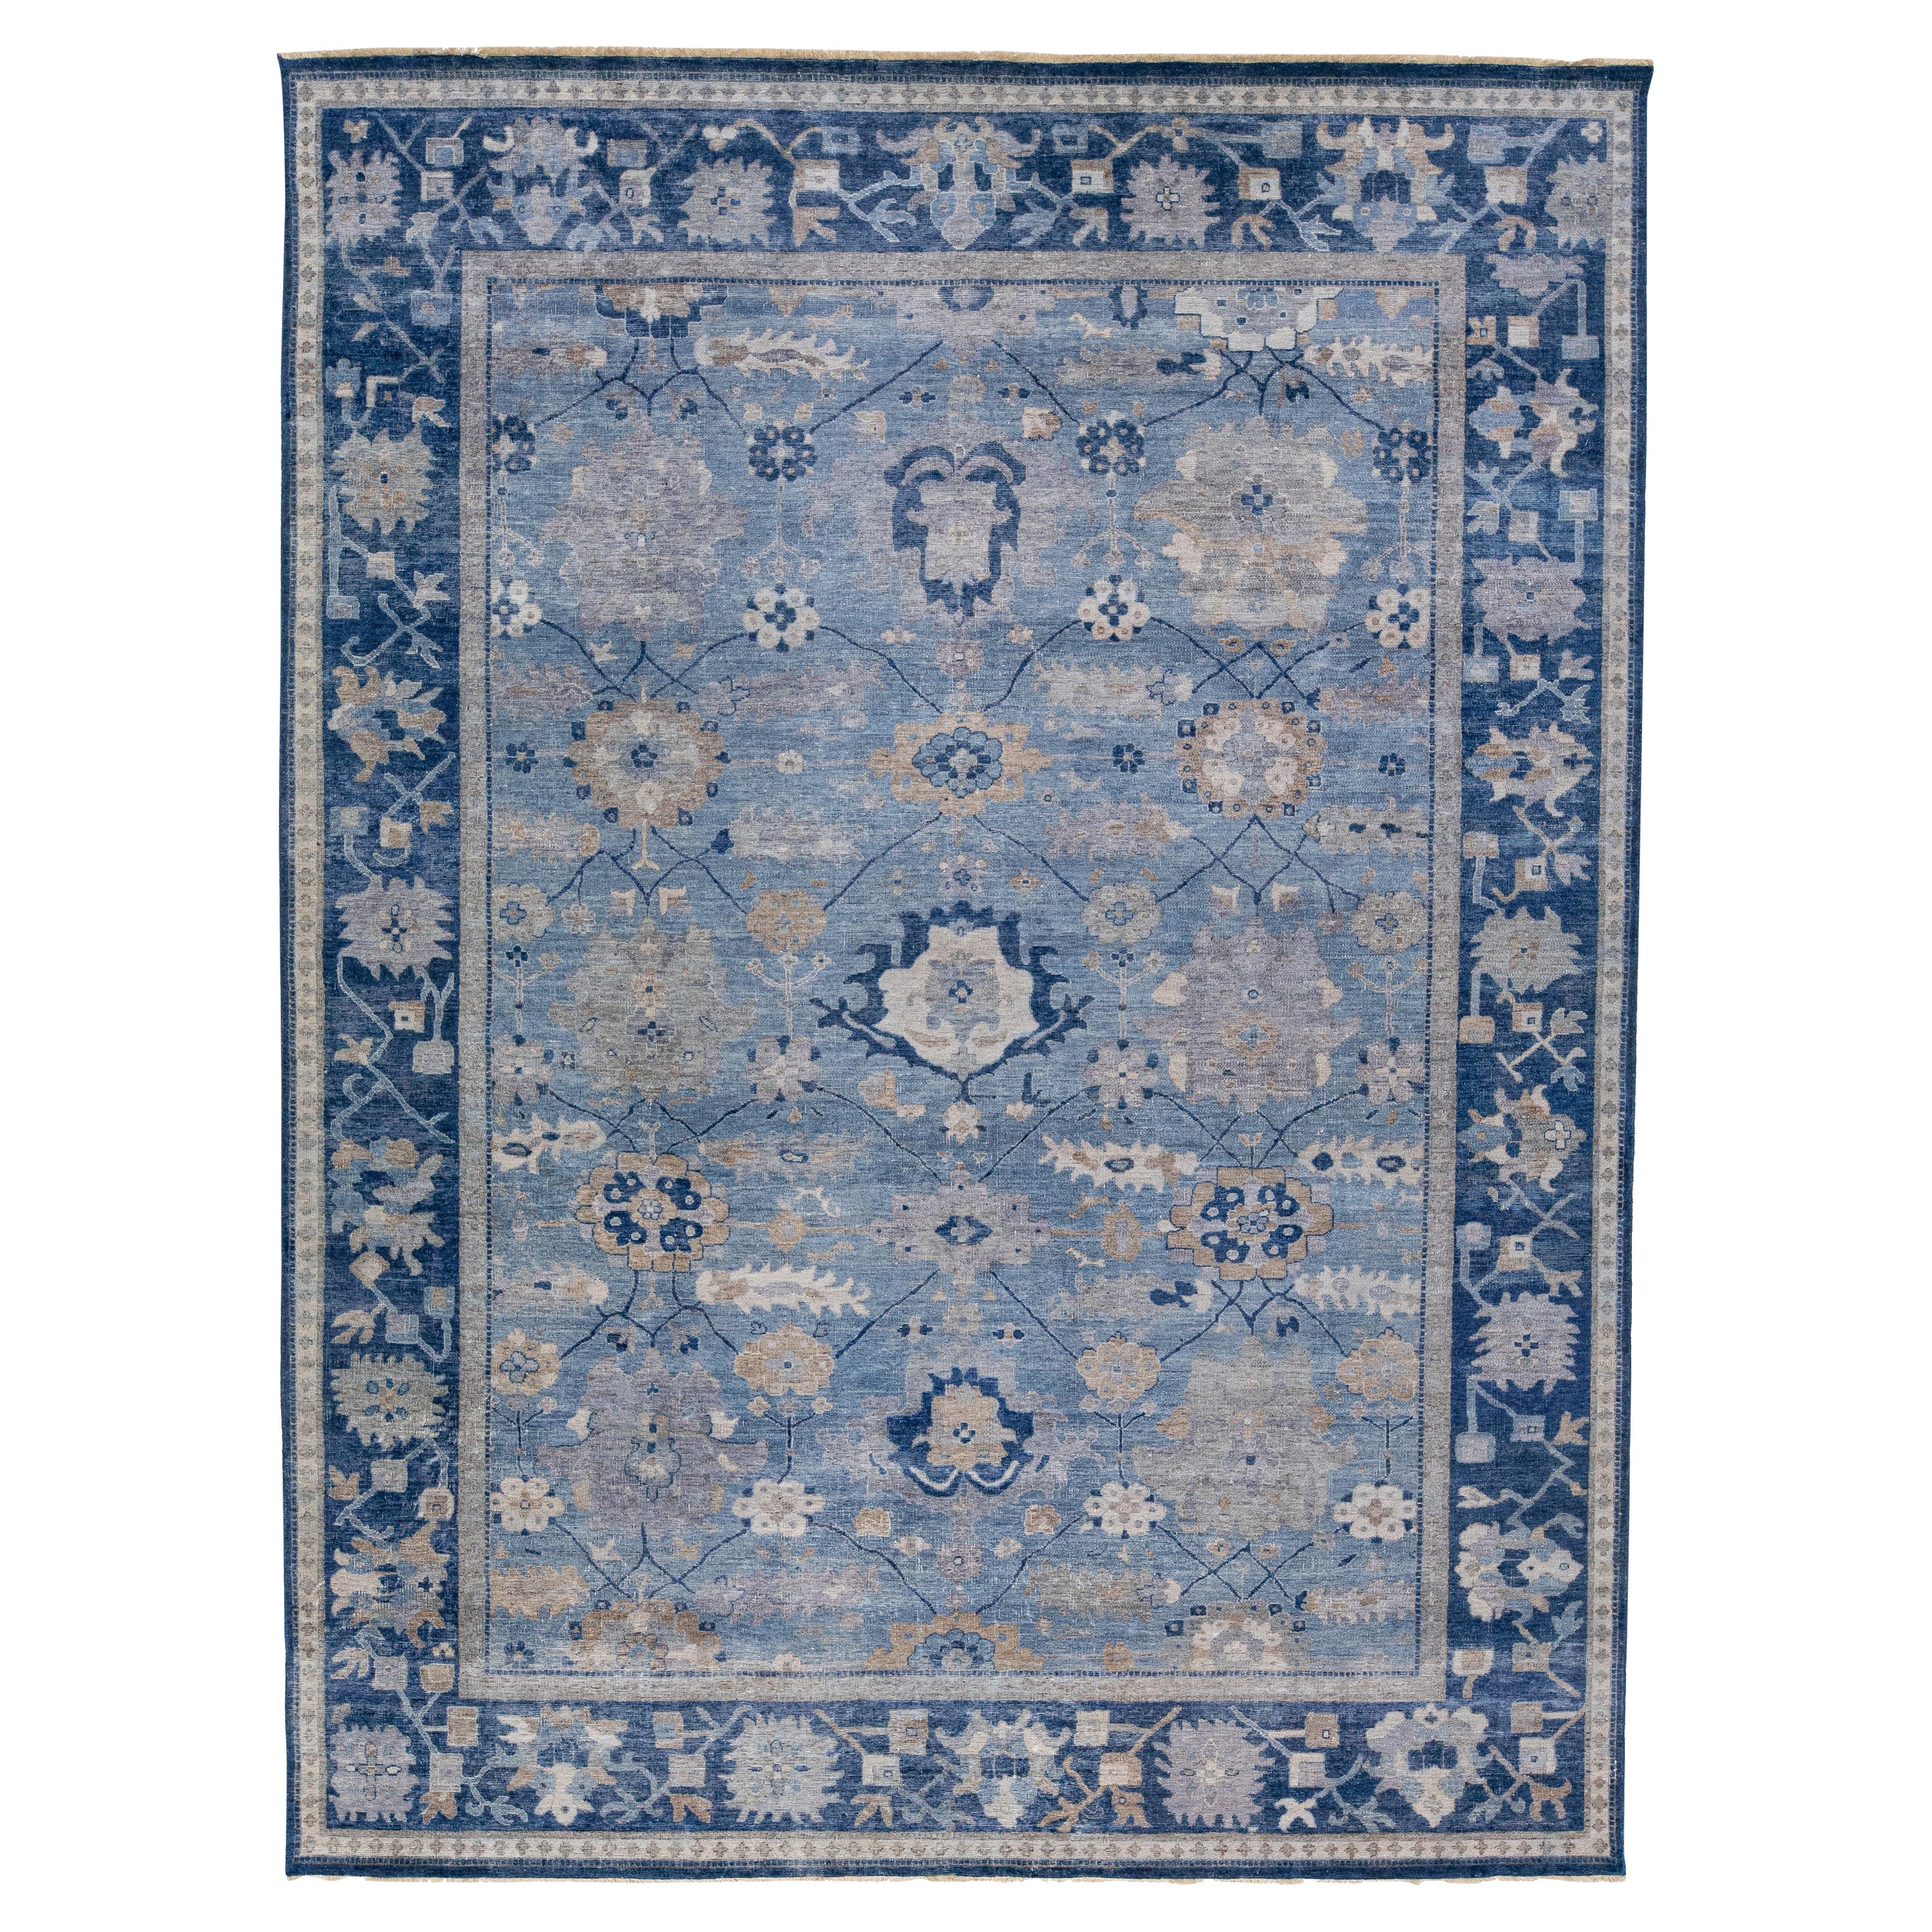 Blue Apadana's Artisan Collection Handmade Floral Designed Wool Rug